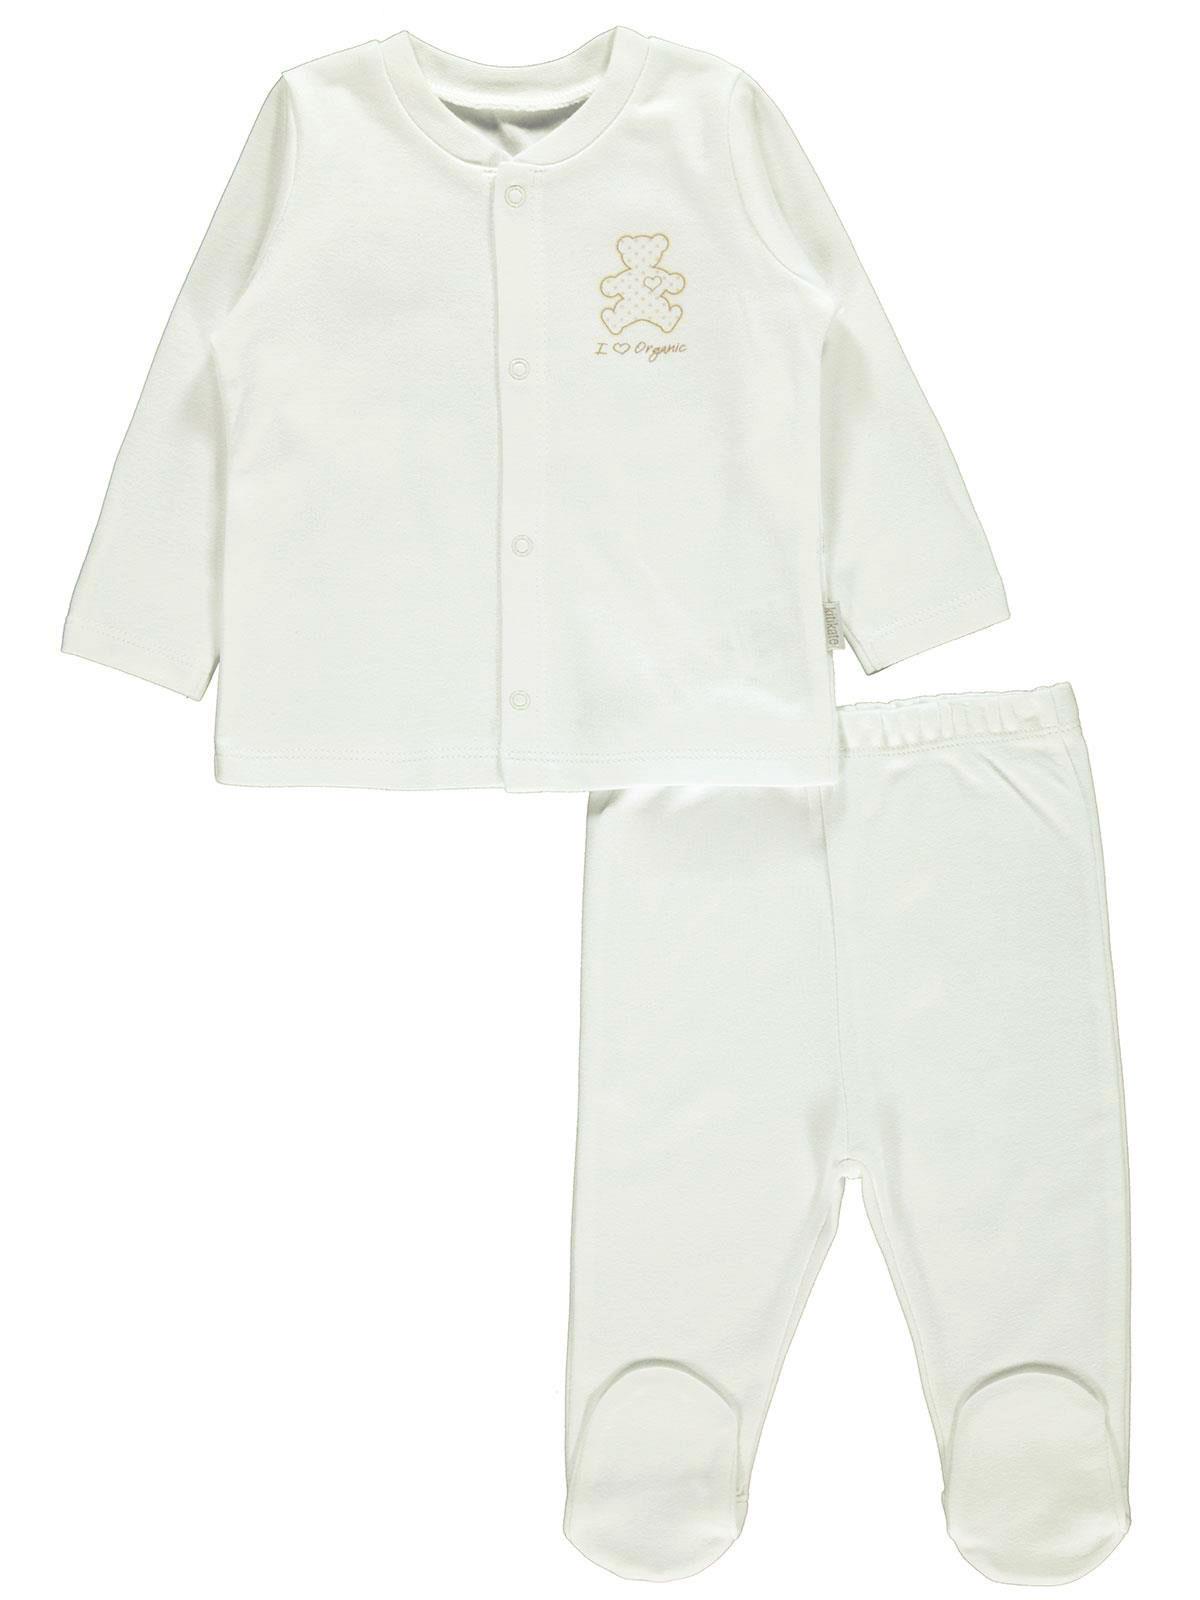 Baby Center Organik Penye Pijama Takımı 0-6 Ay  Ekru